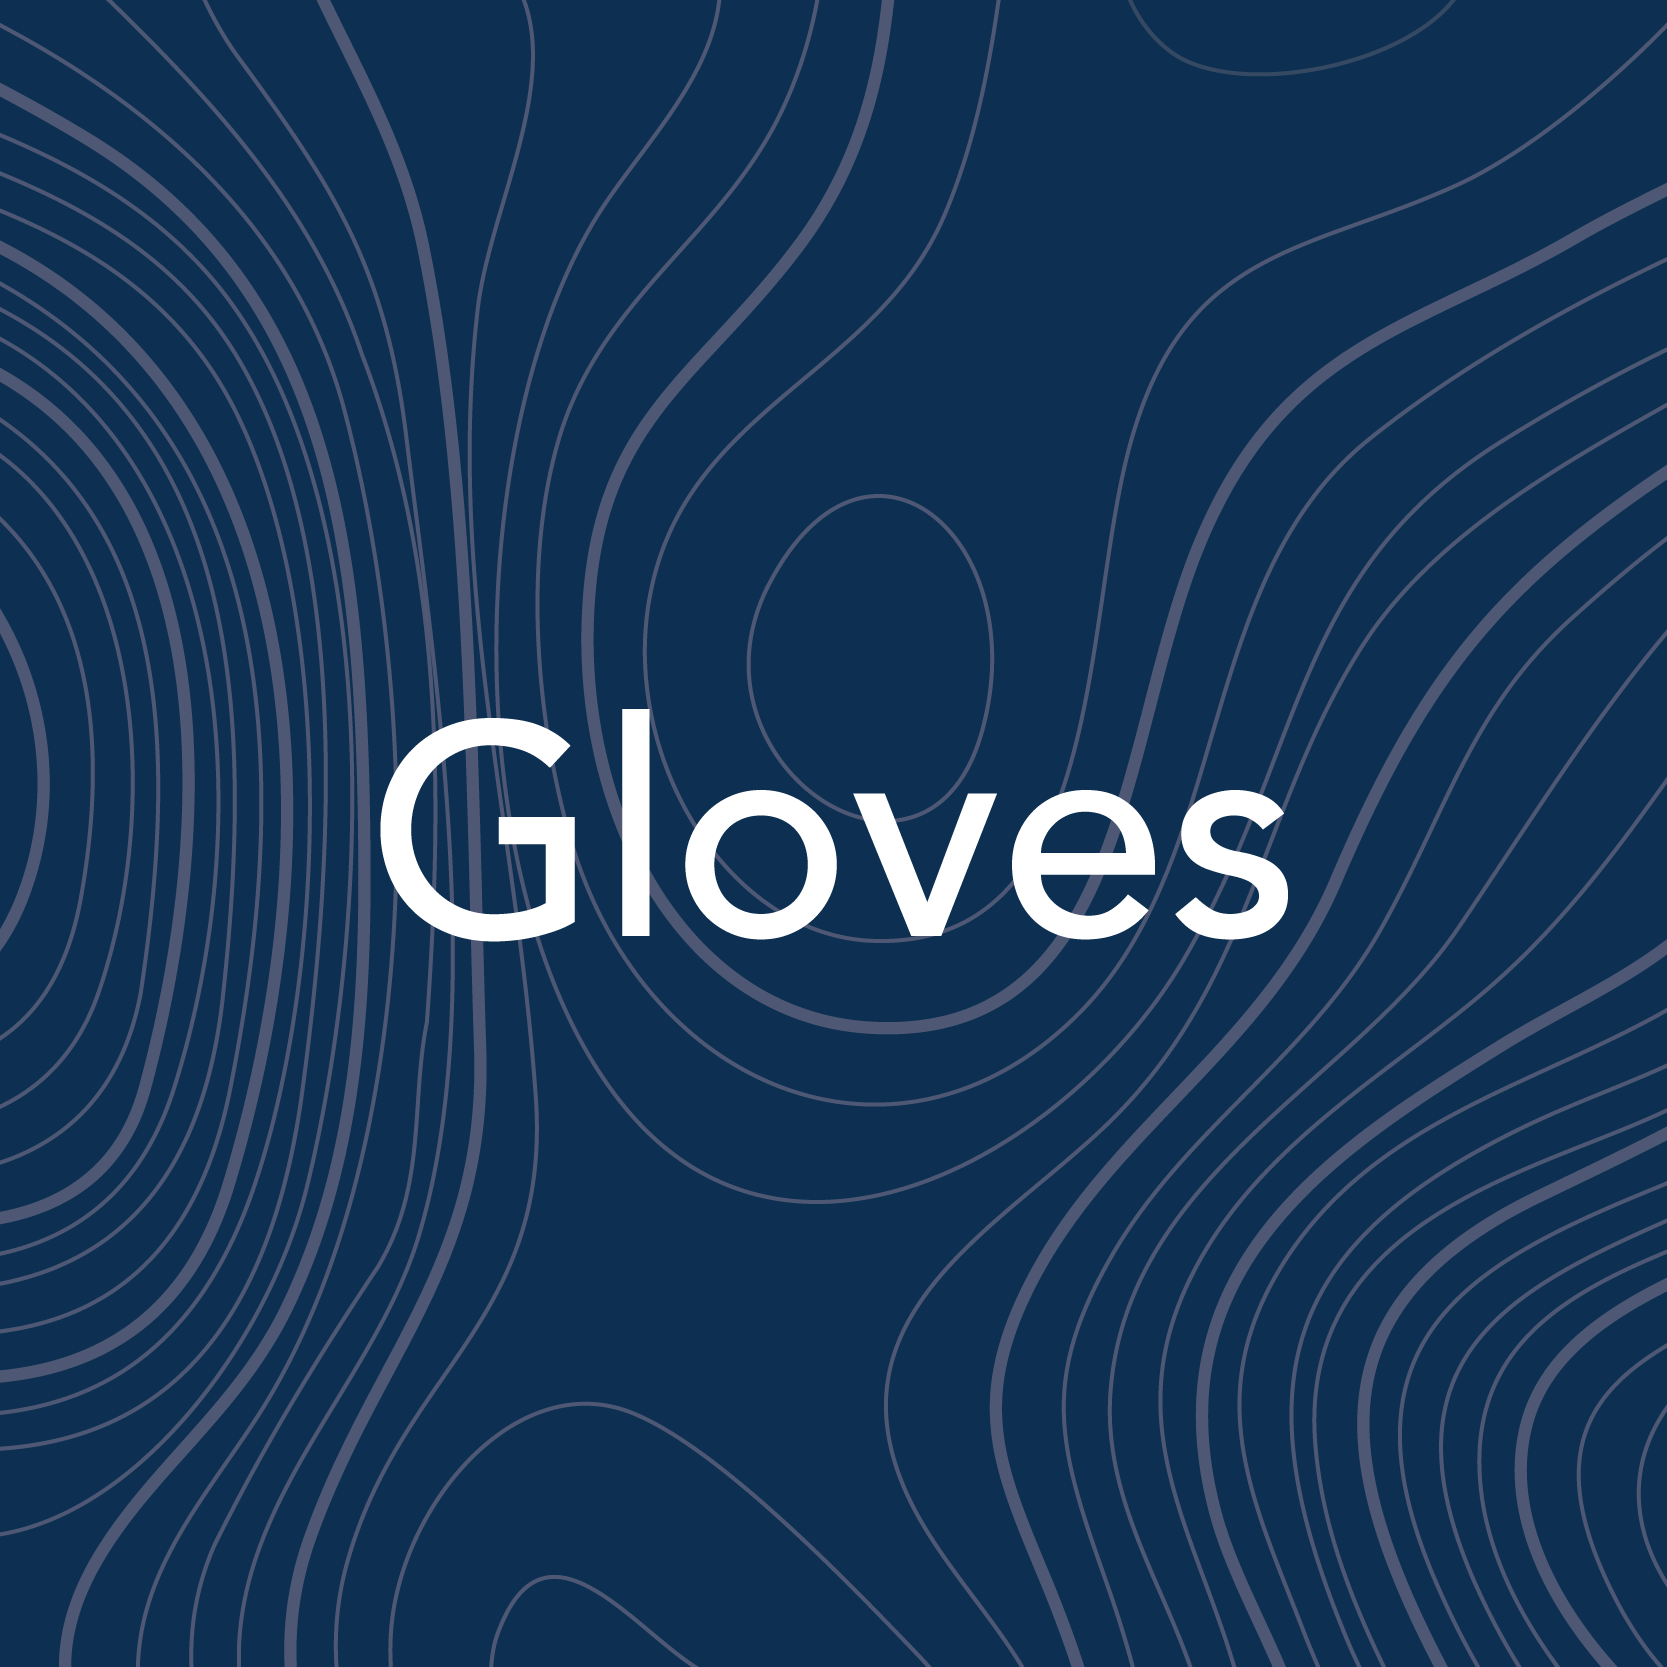 Gloves logo on a blue background.